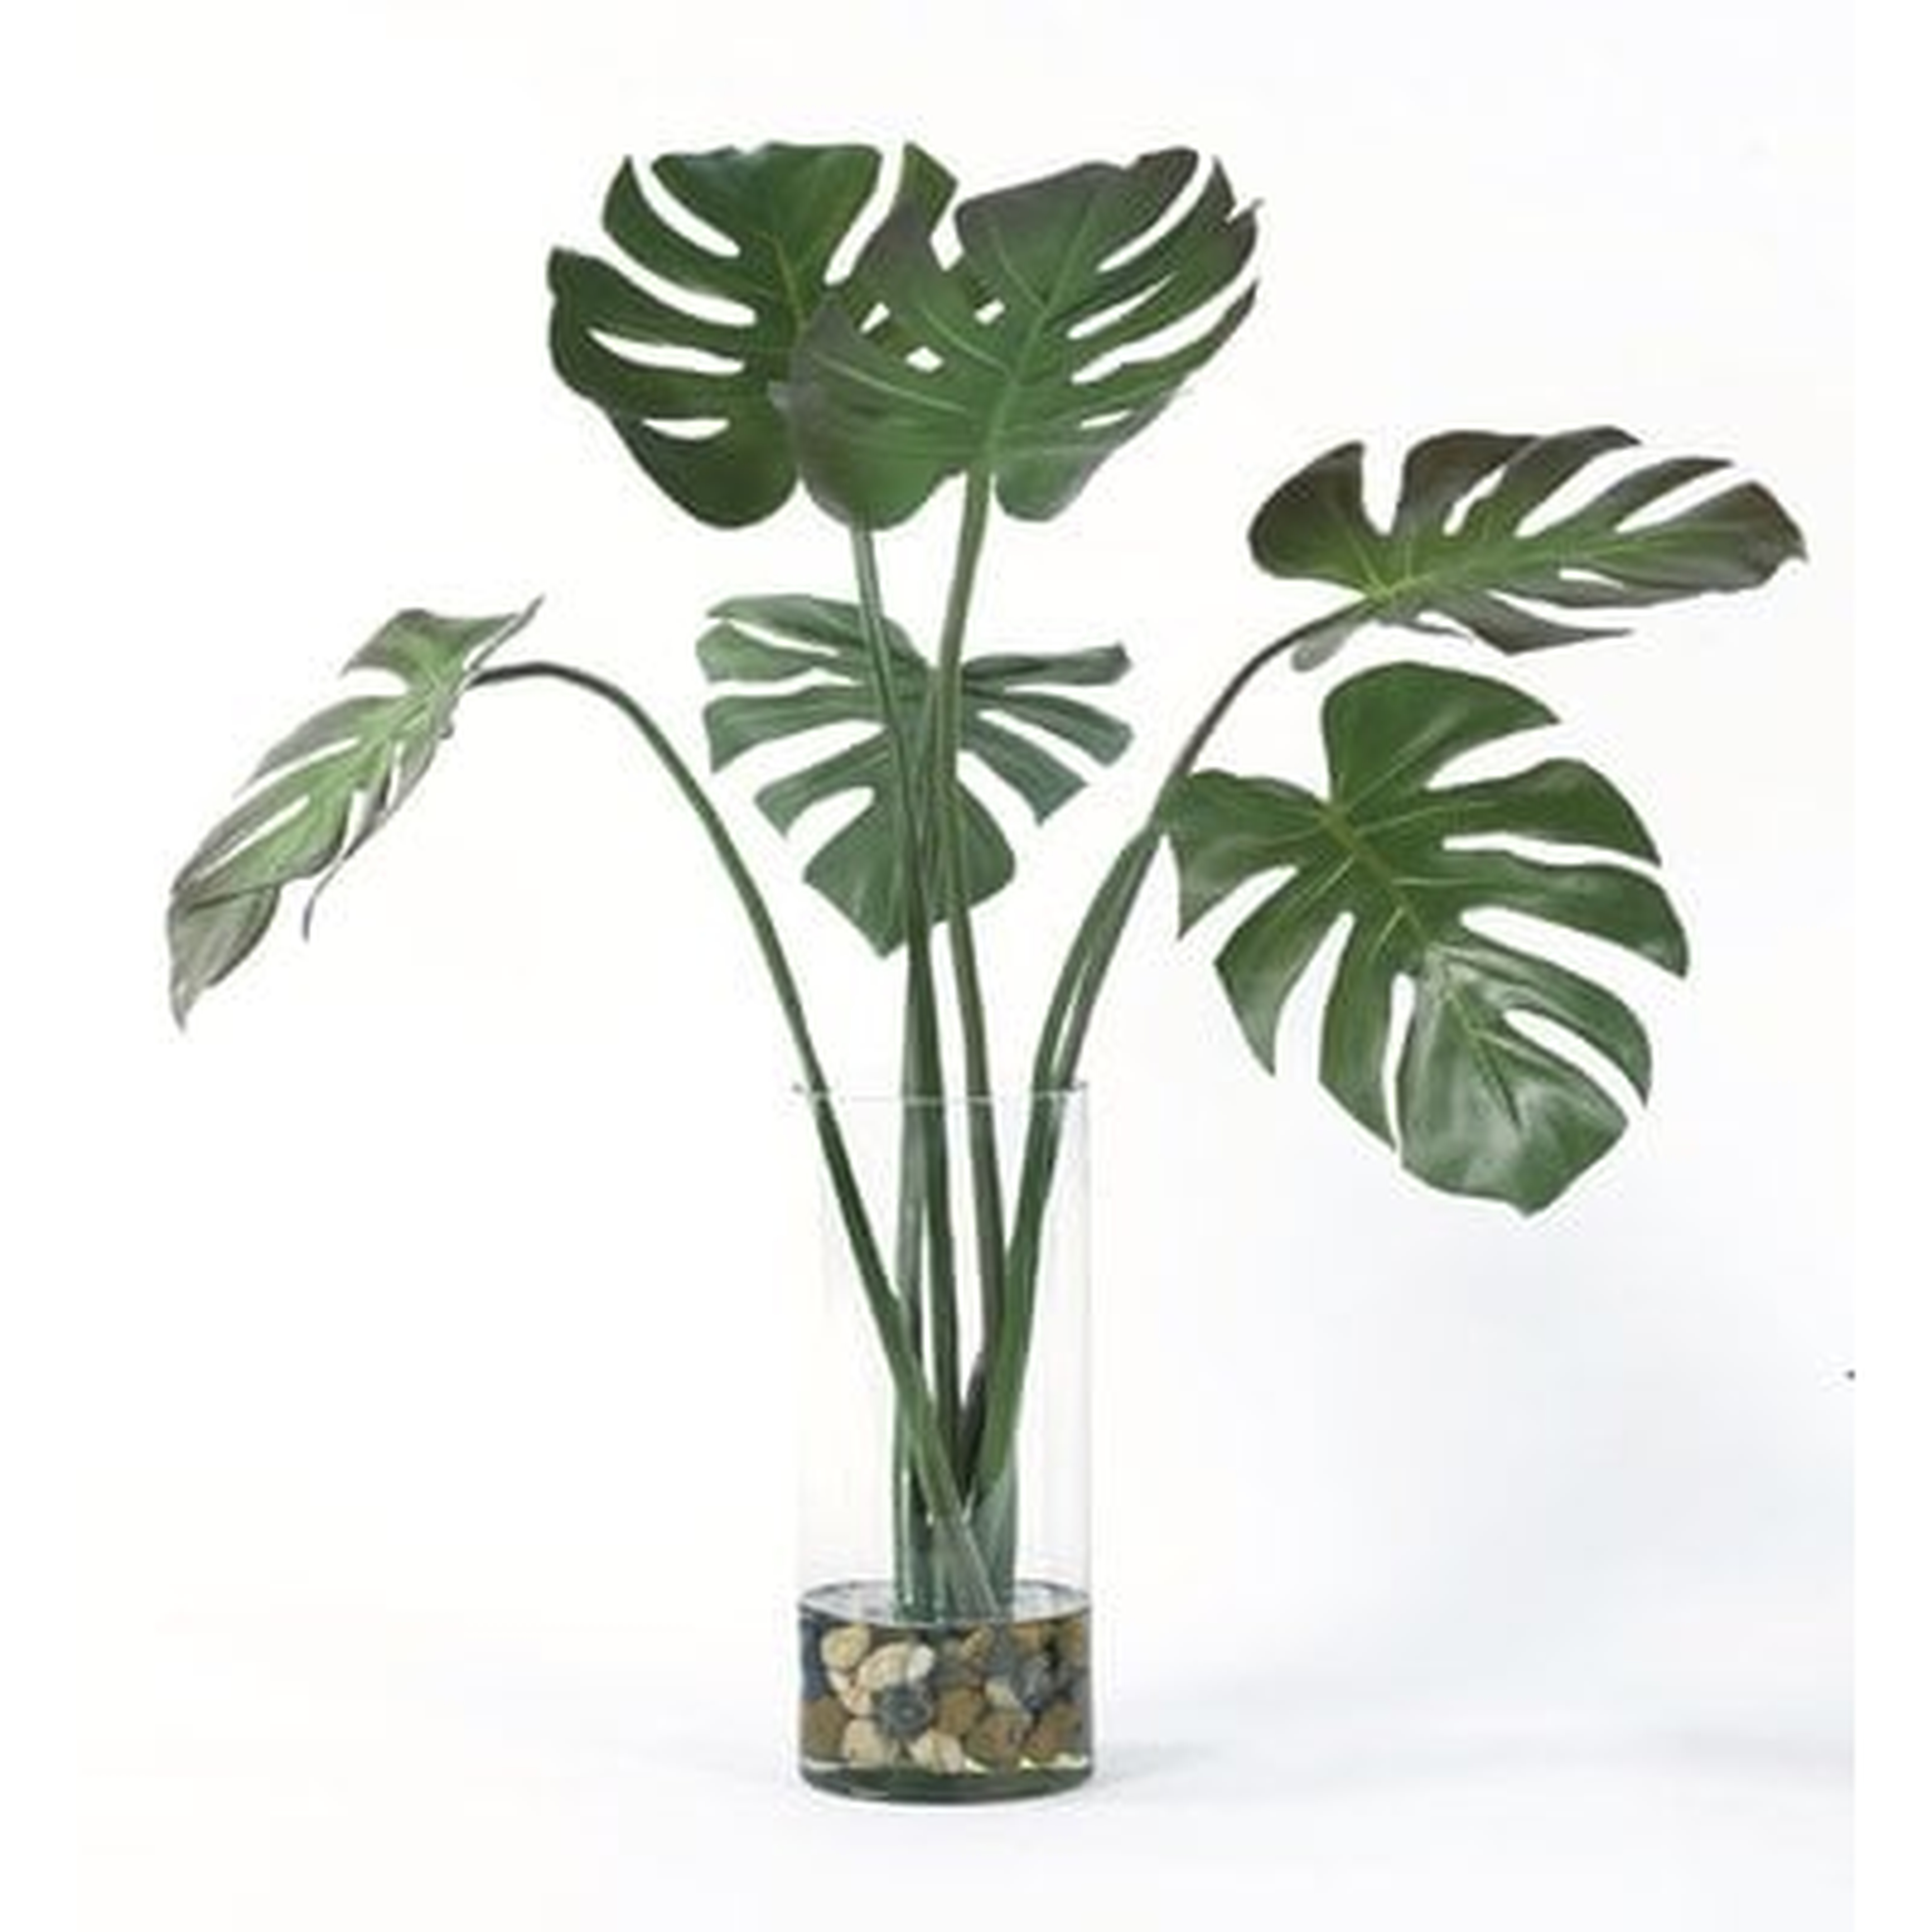 Split Leaves Foliage Plant in Glass Vase - Wayfair